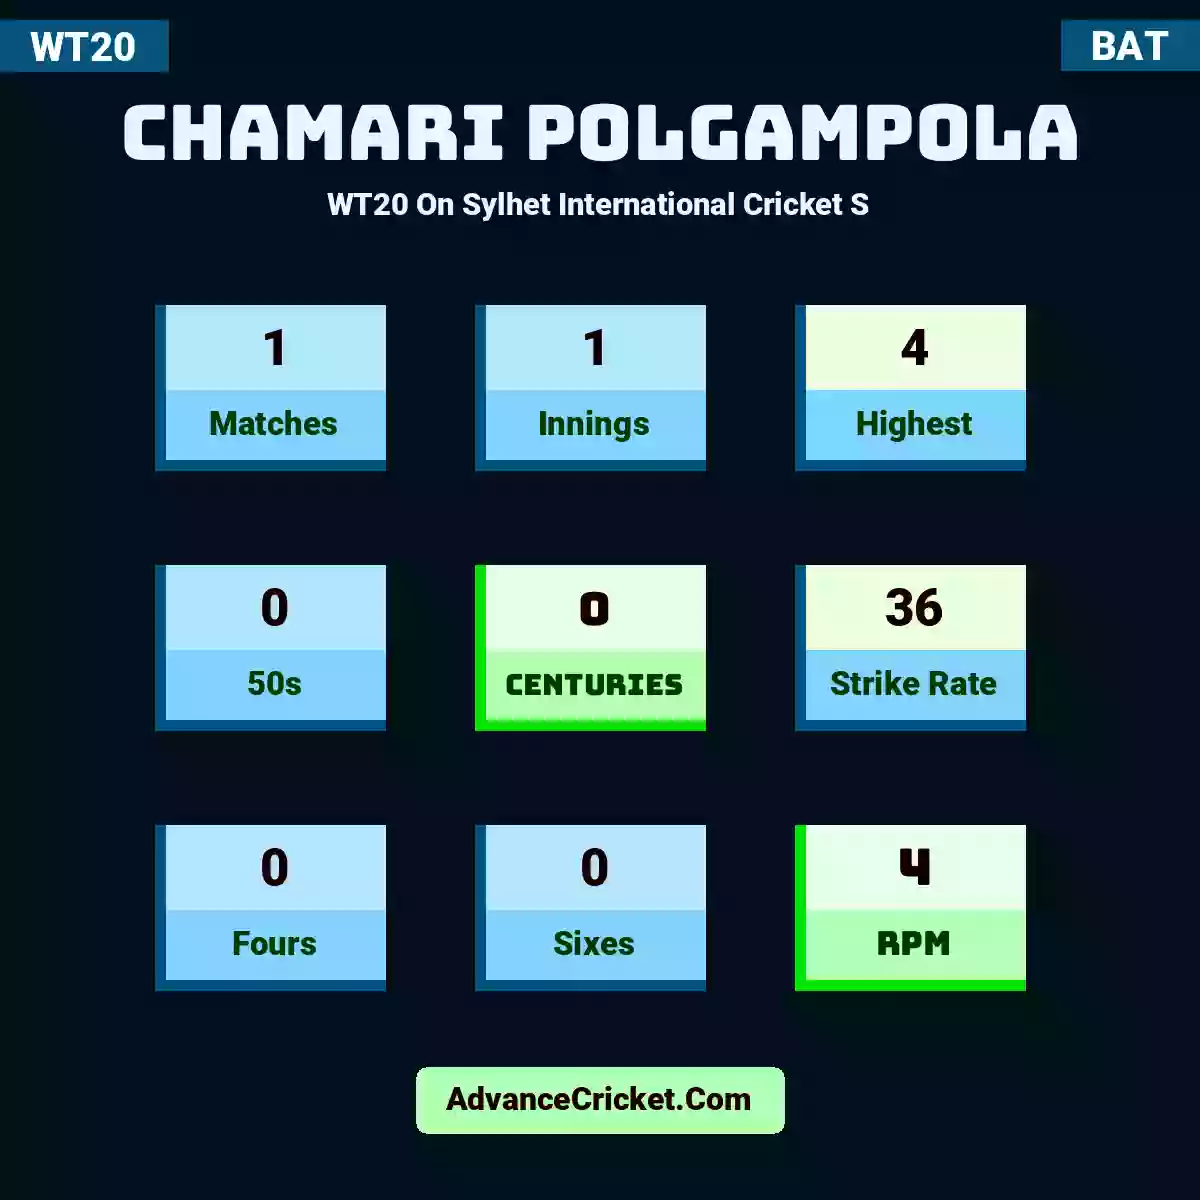 Chamari Polgampola WT20  On Sylhet International Cricket S, Chamari Polgampola played 1 matches, scored 4 runs as highest, 0 half-centuries, and 0 centuries, with a strike rate of 36. C.Polgampola hit 0 fours and 0 sixes, with an RPM of 4.